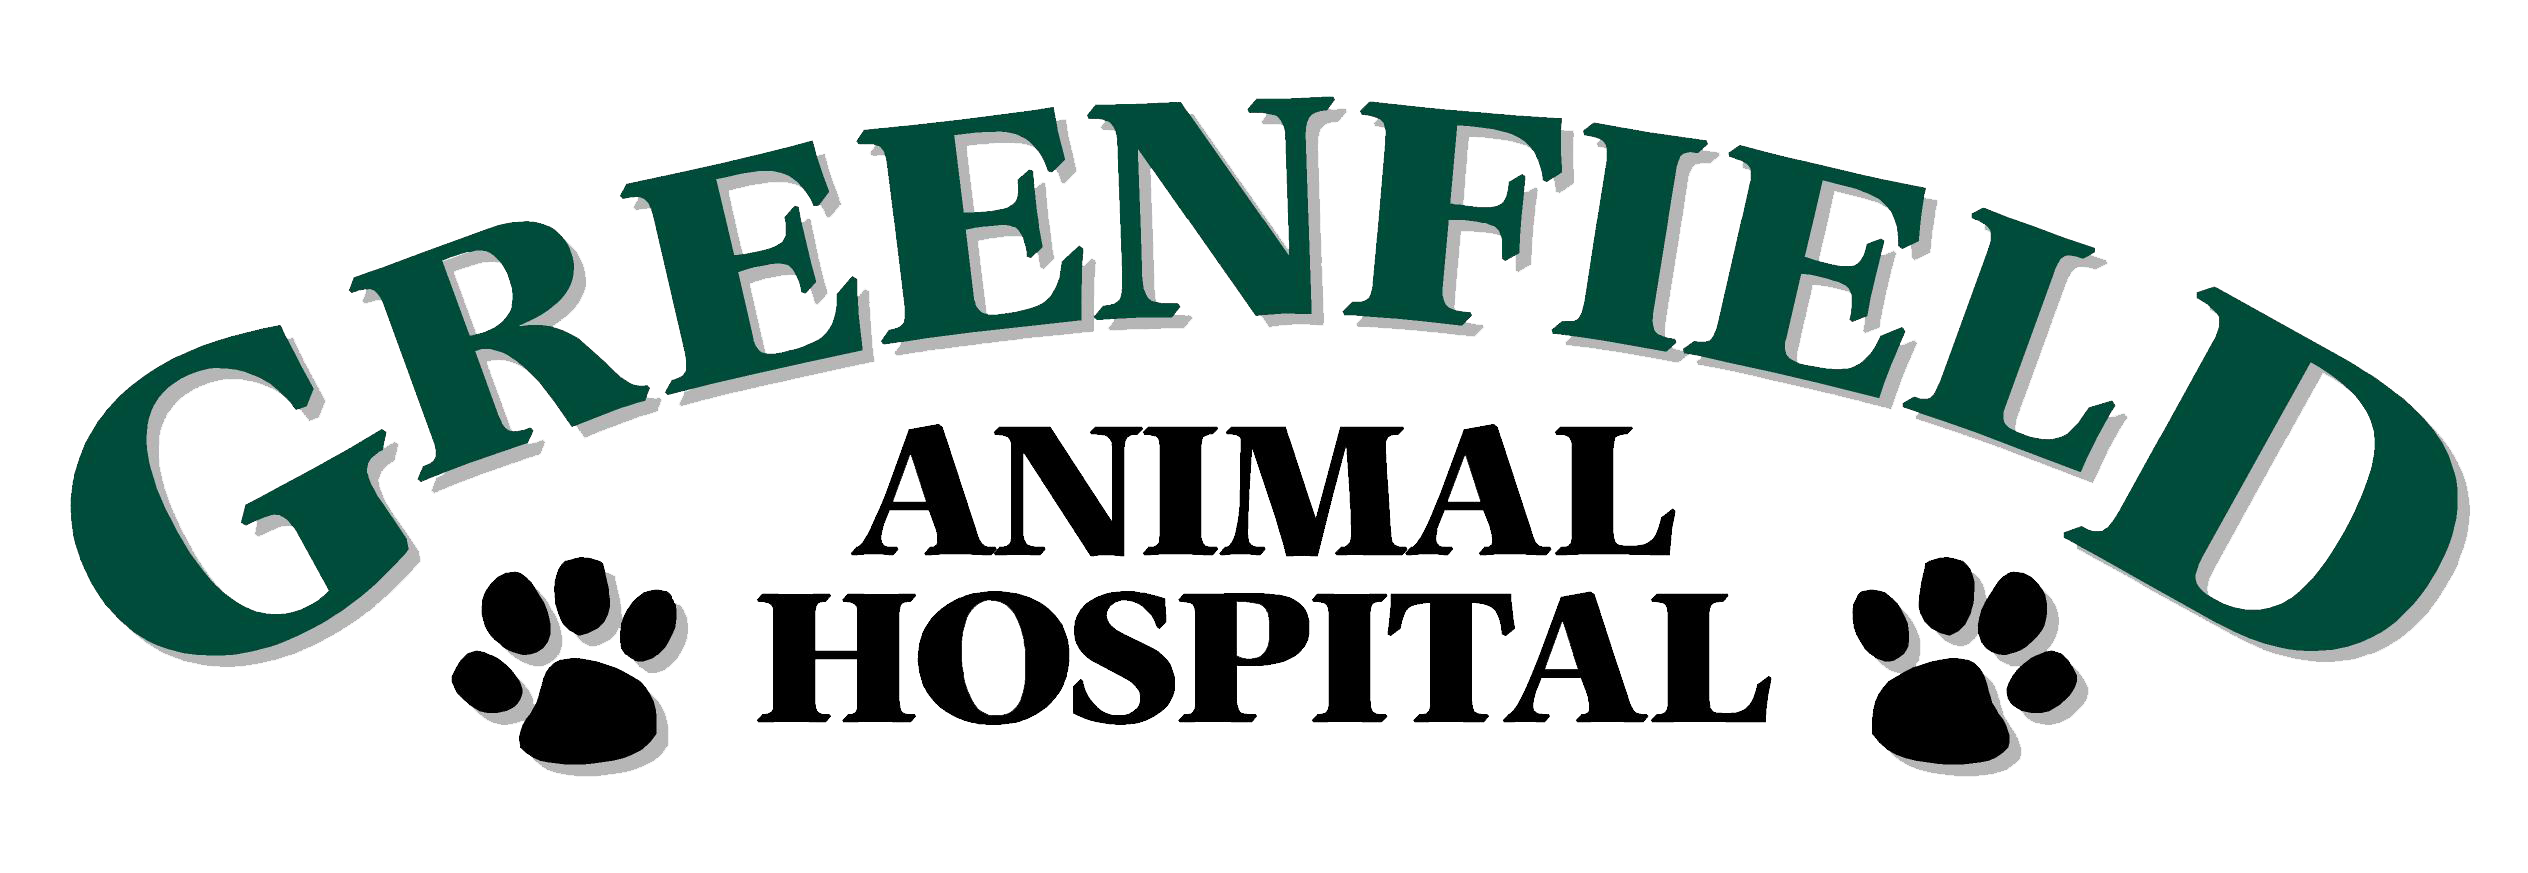 greenfield animal hospital logo